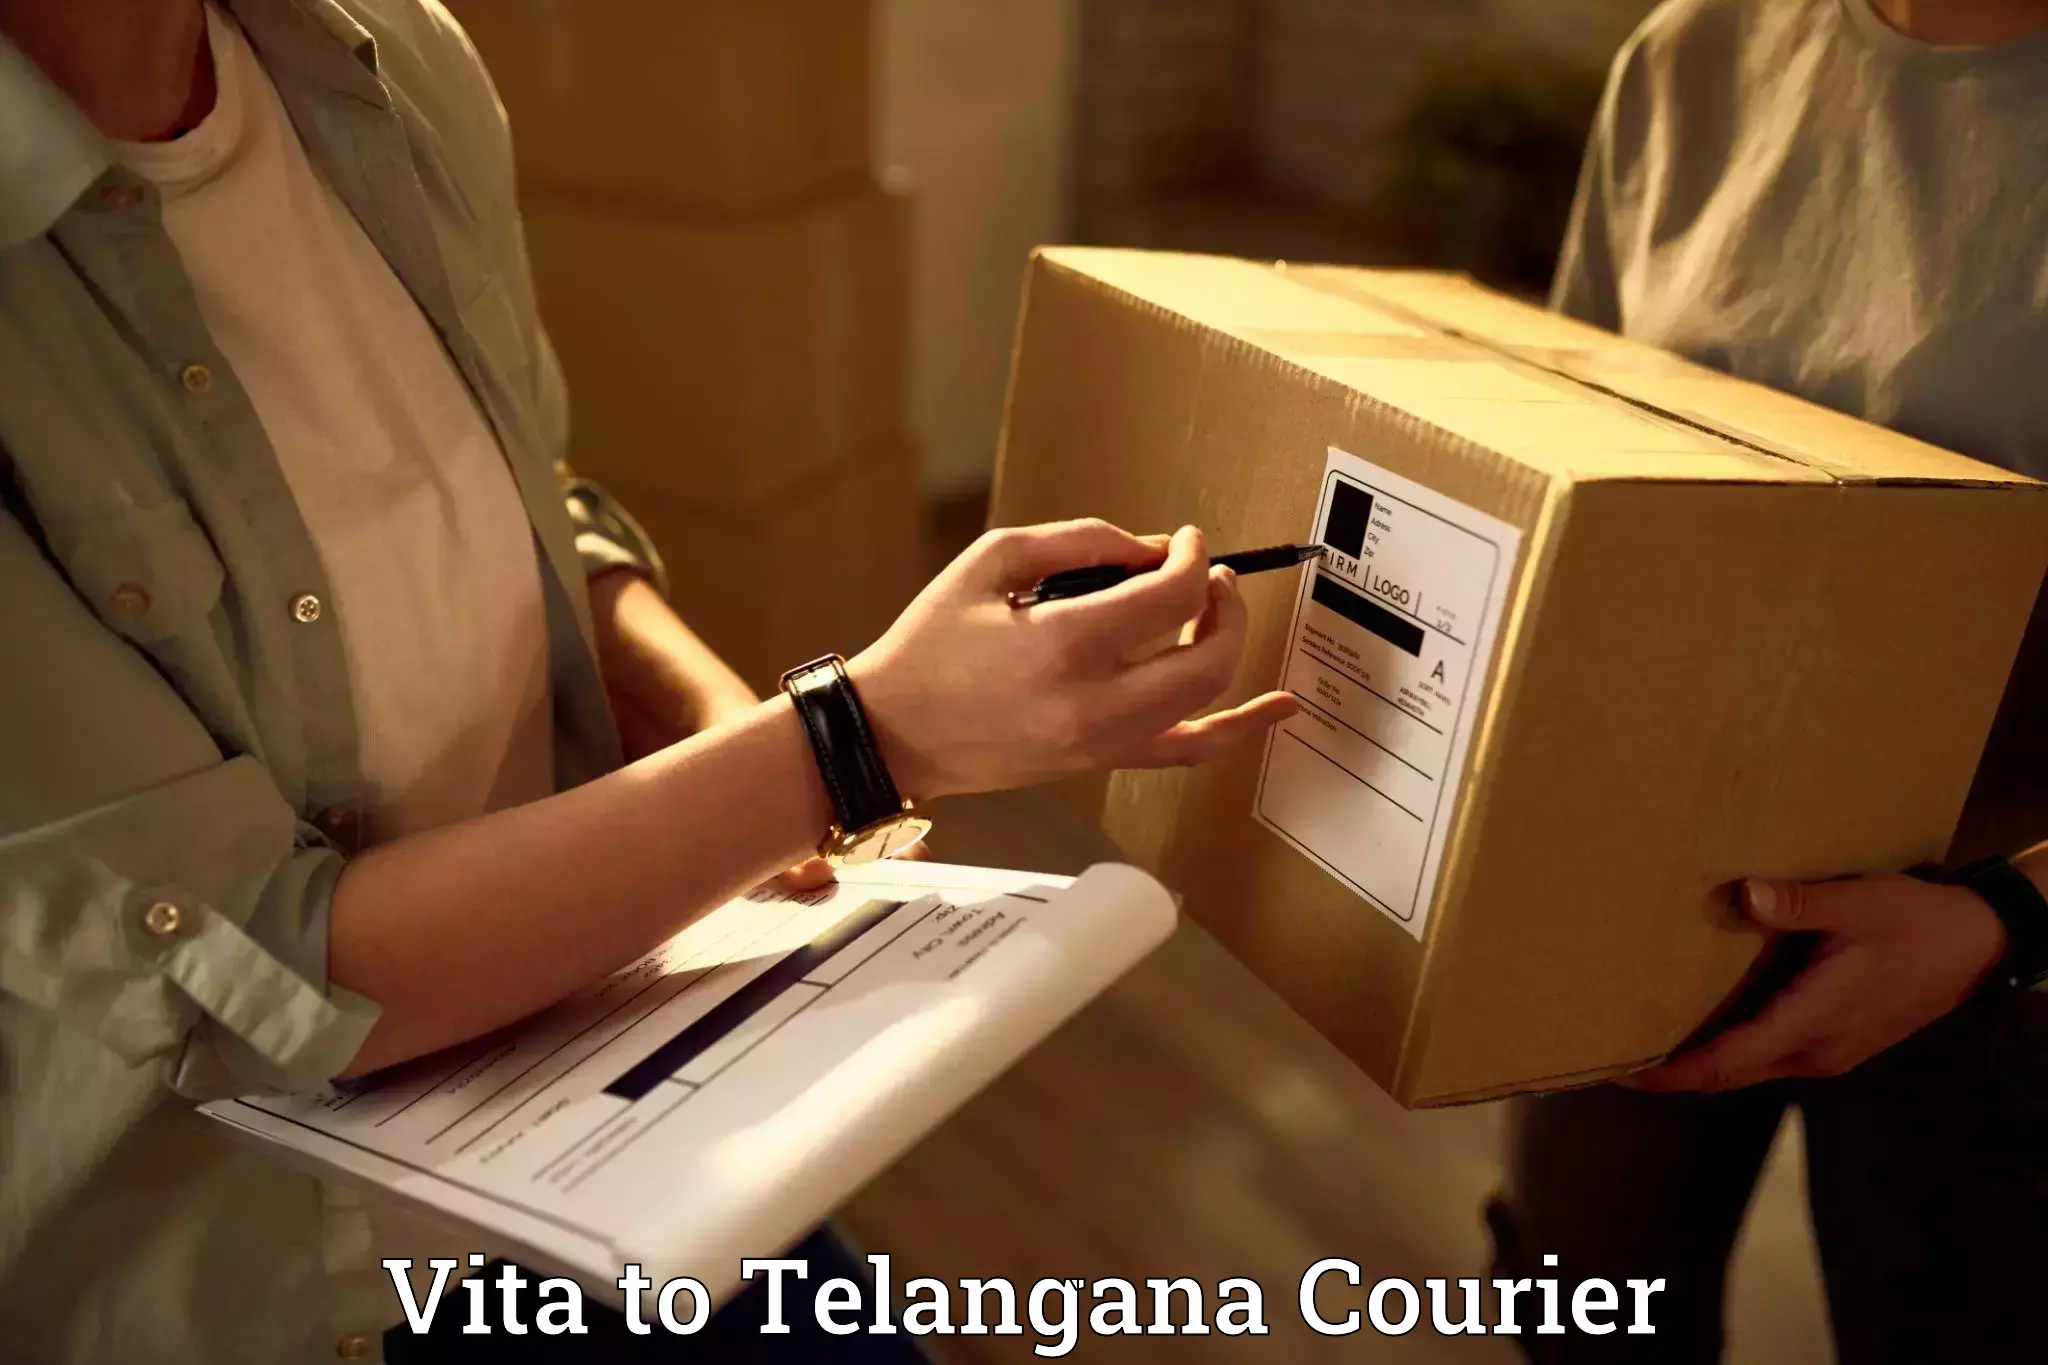 Furniture delivery service Vita to Telangana